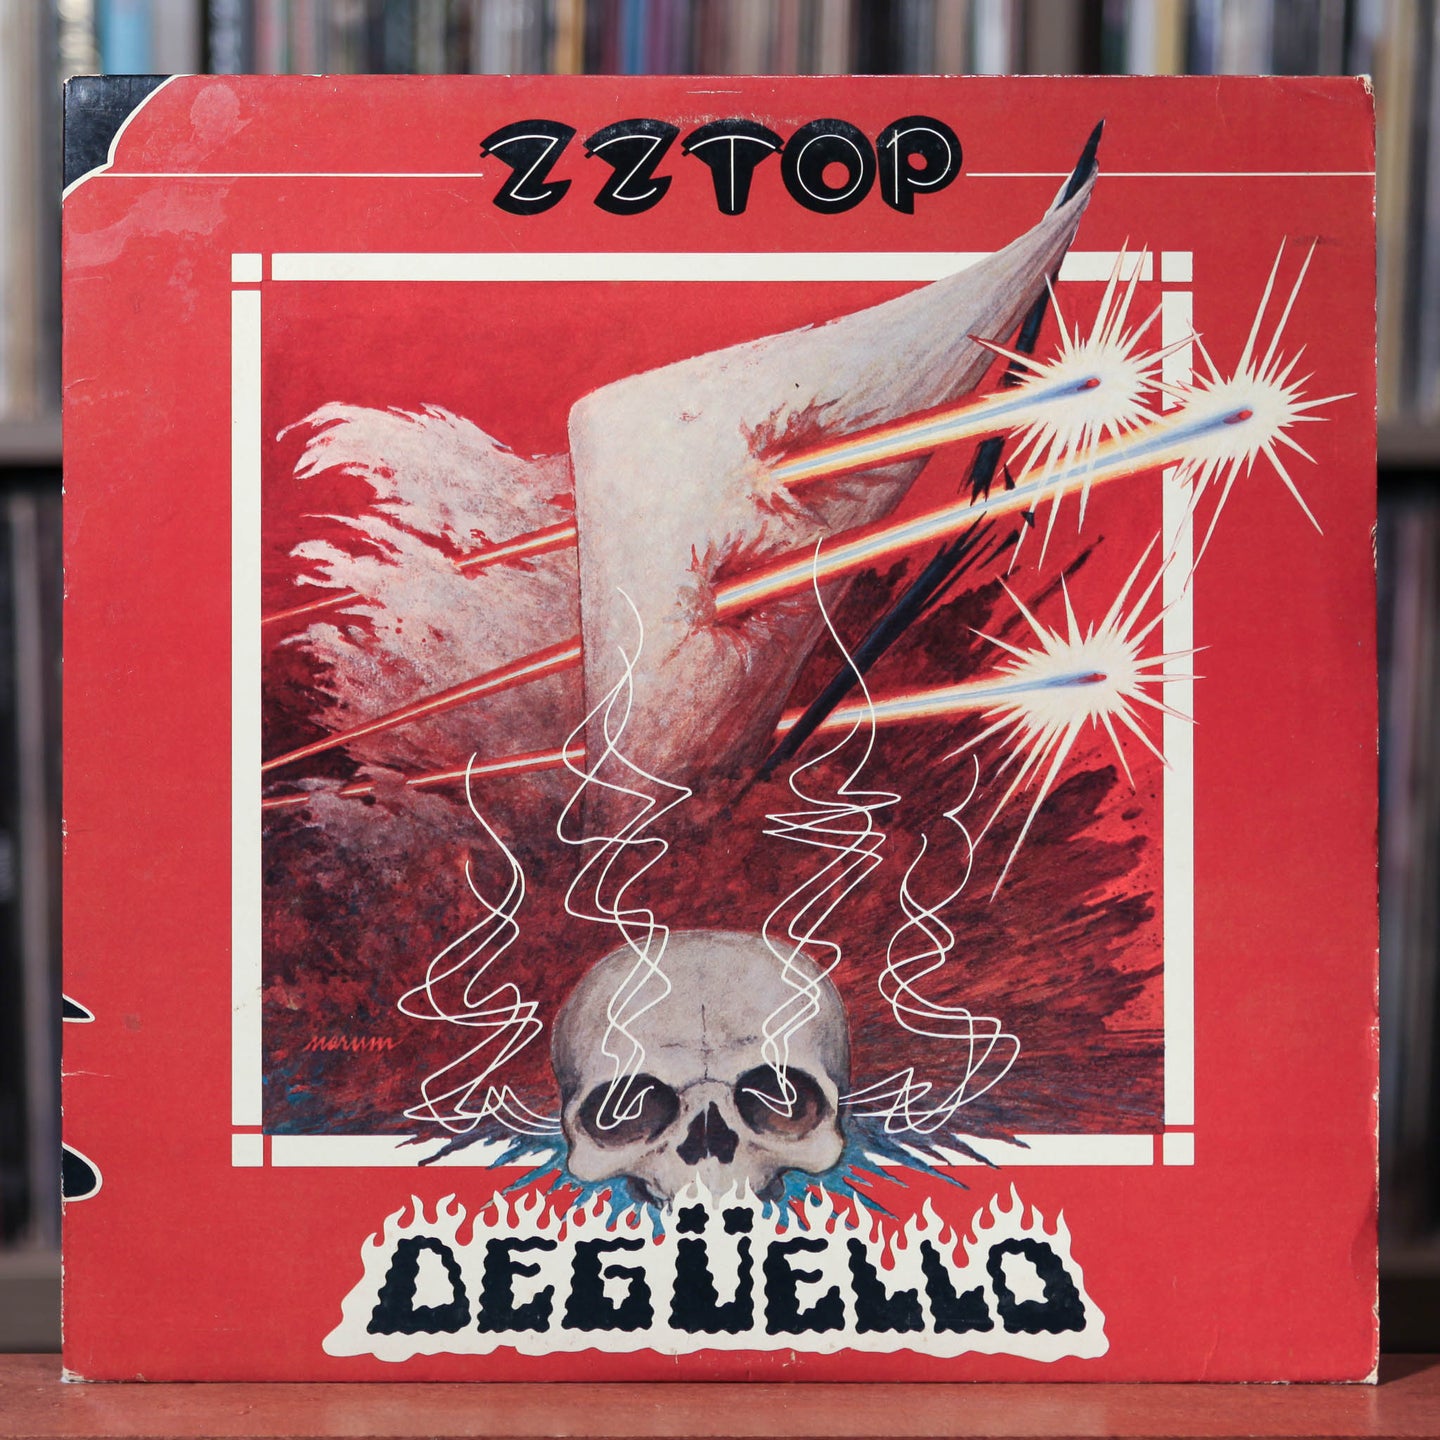 ZZ Top - Degüello - 1979 Warner, VG+/VG